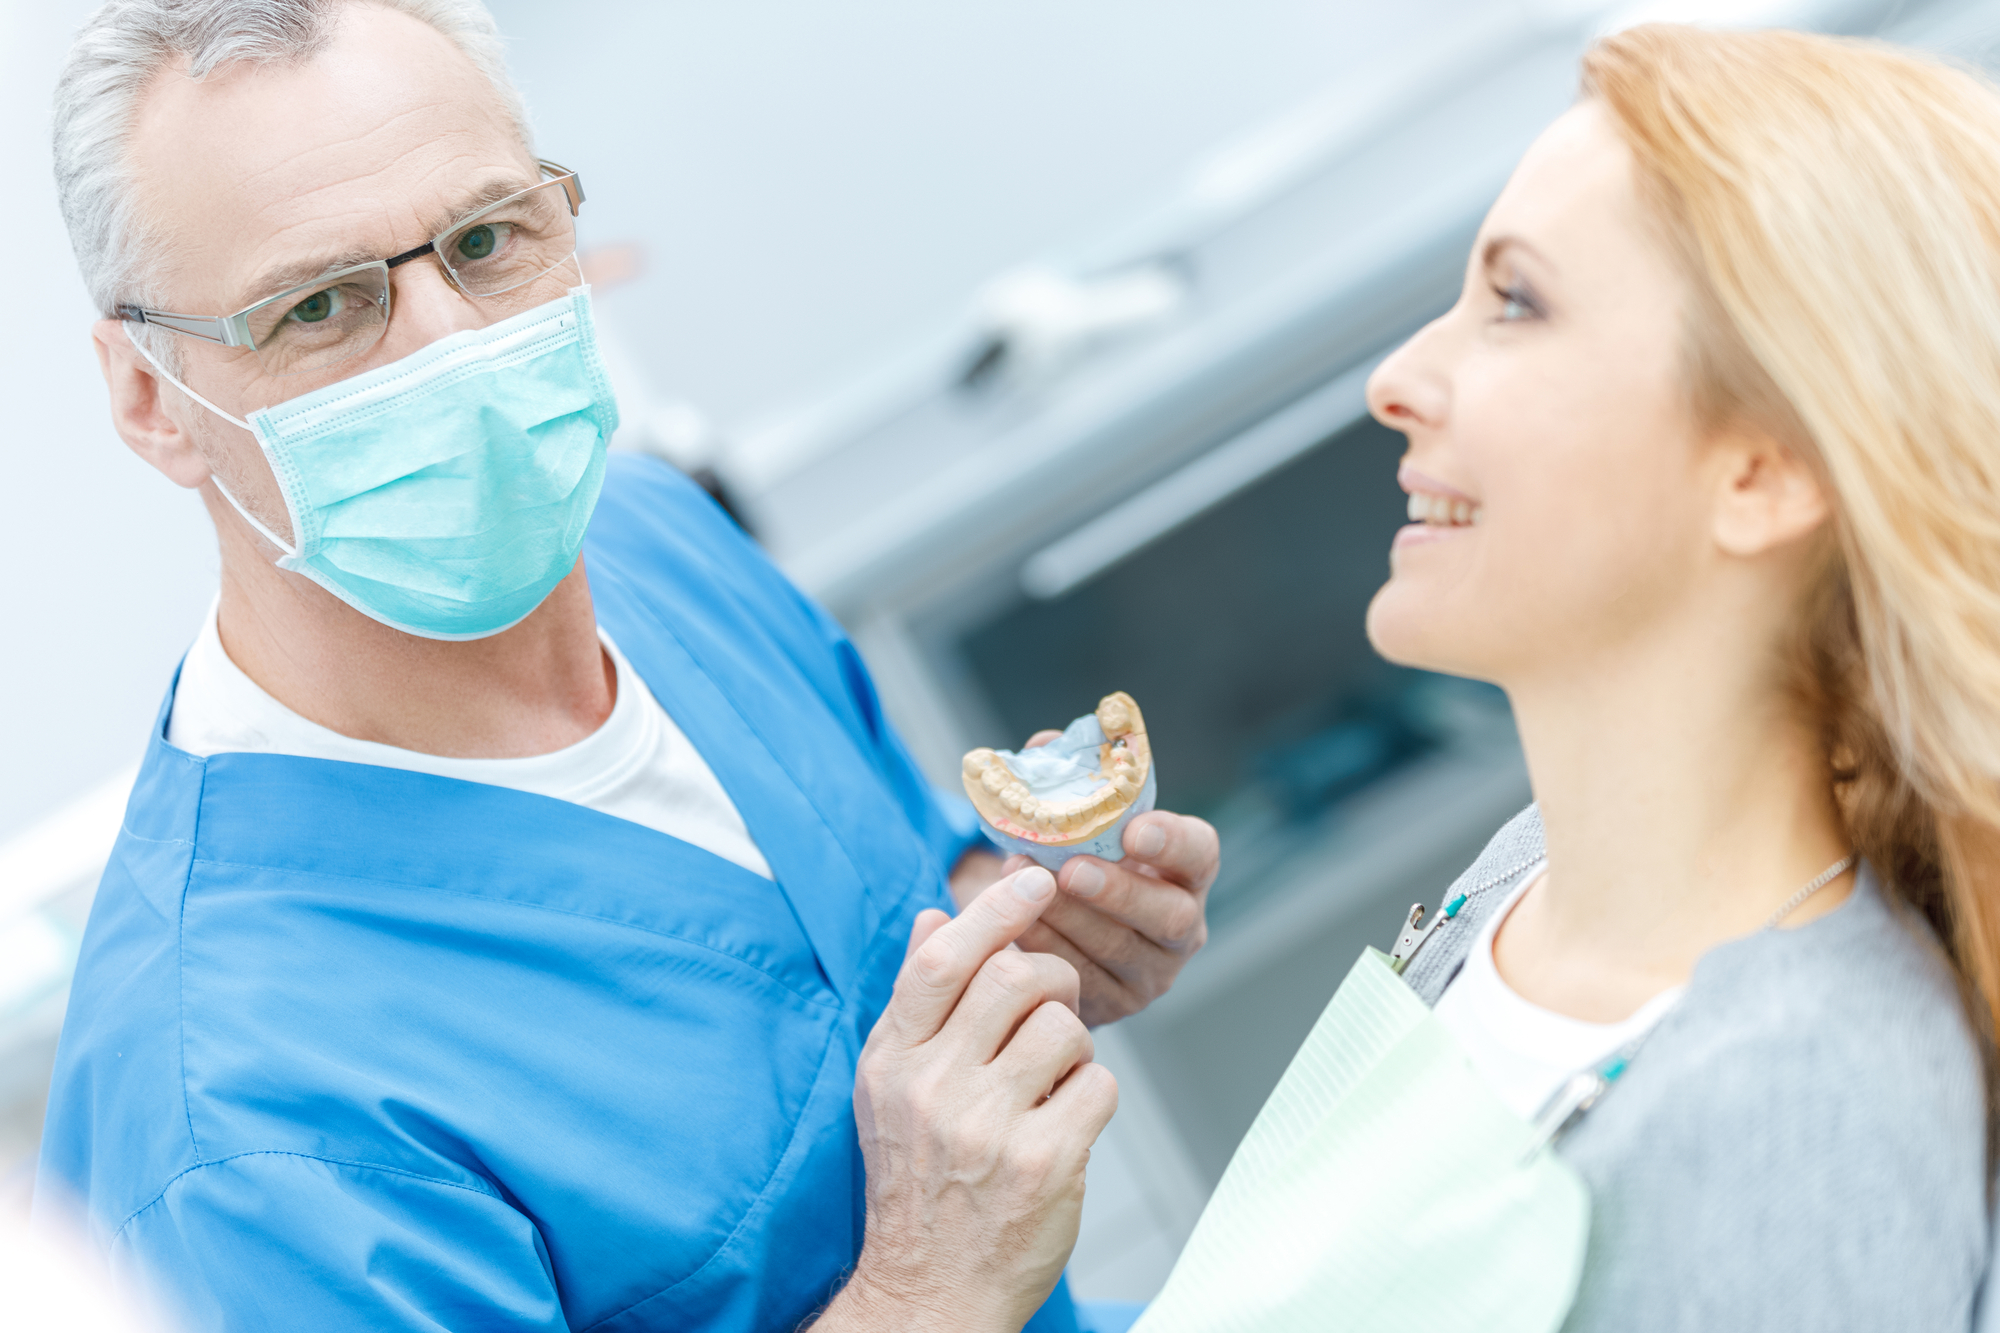 Dentist explaining procedure to patient.